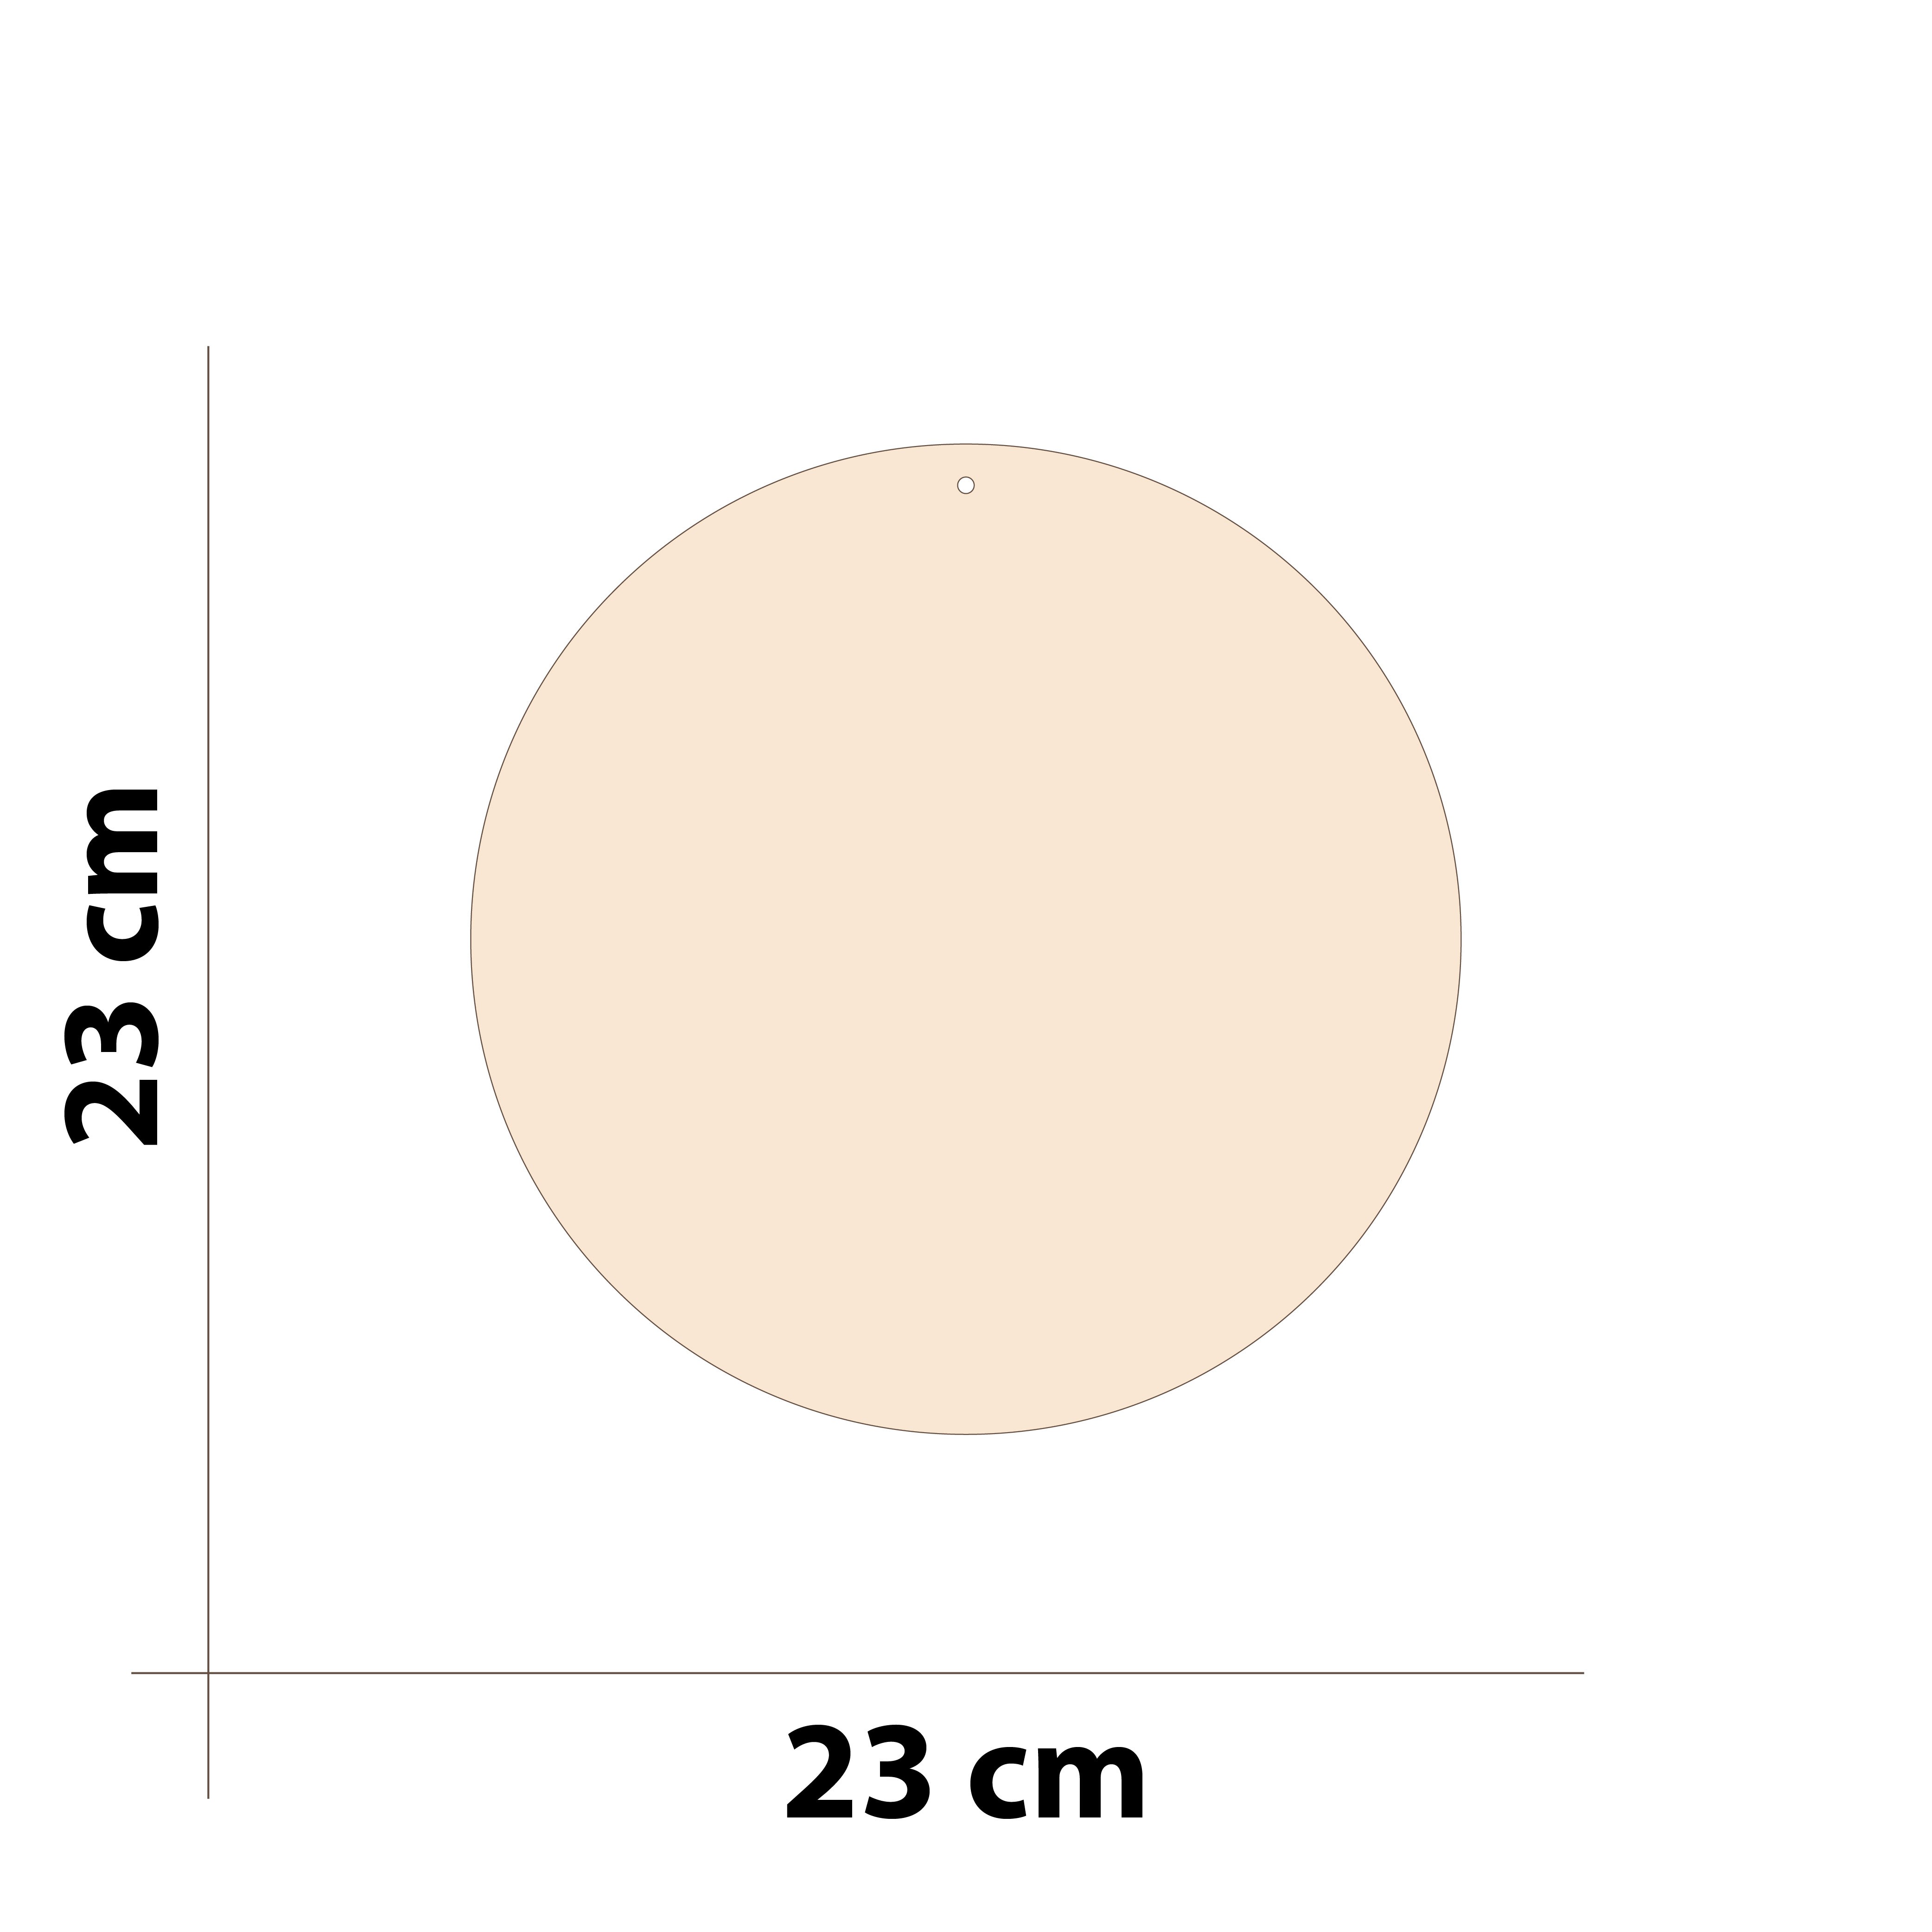 Cerchi di Legno per Hobbistica - Misure 23-30-35 cm - Tricot Cafè